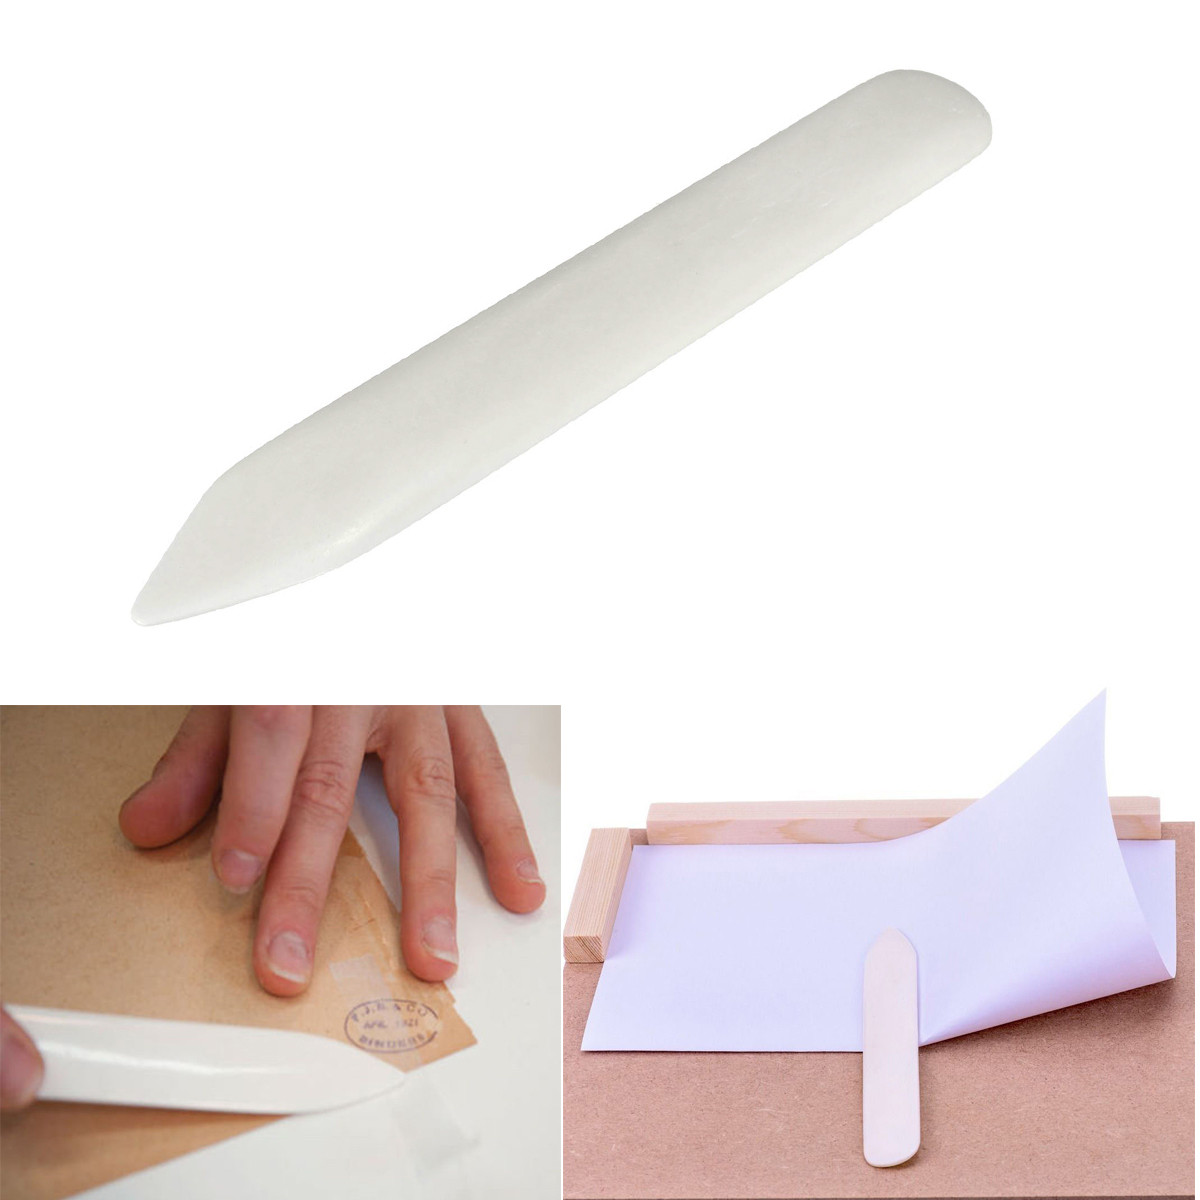 Natural-Bone-Folder-Artist-Tool-For-Scoring-Folding-Creasing-Paper-Leather-Craft-Tool-1632393-2